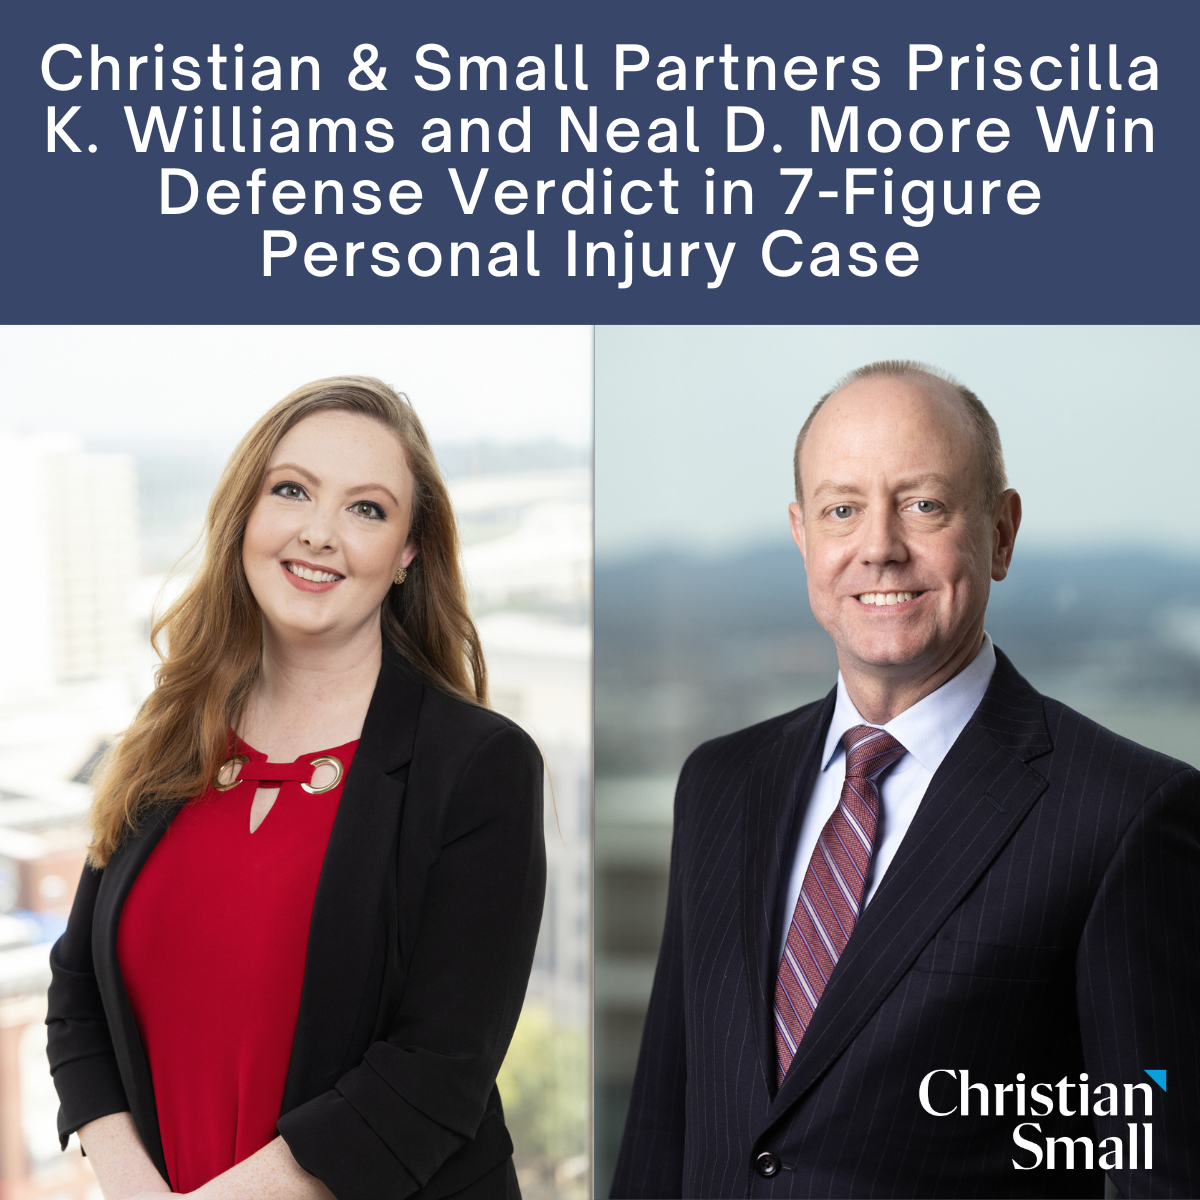 Christian & Small Partners Priscilla K. Williams and Neal D. Moore Win Defense Verdict in 7-Figure Personal Injury Case